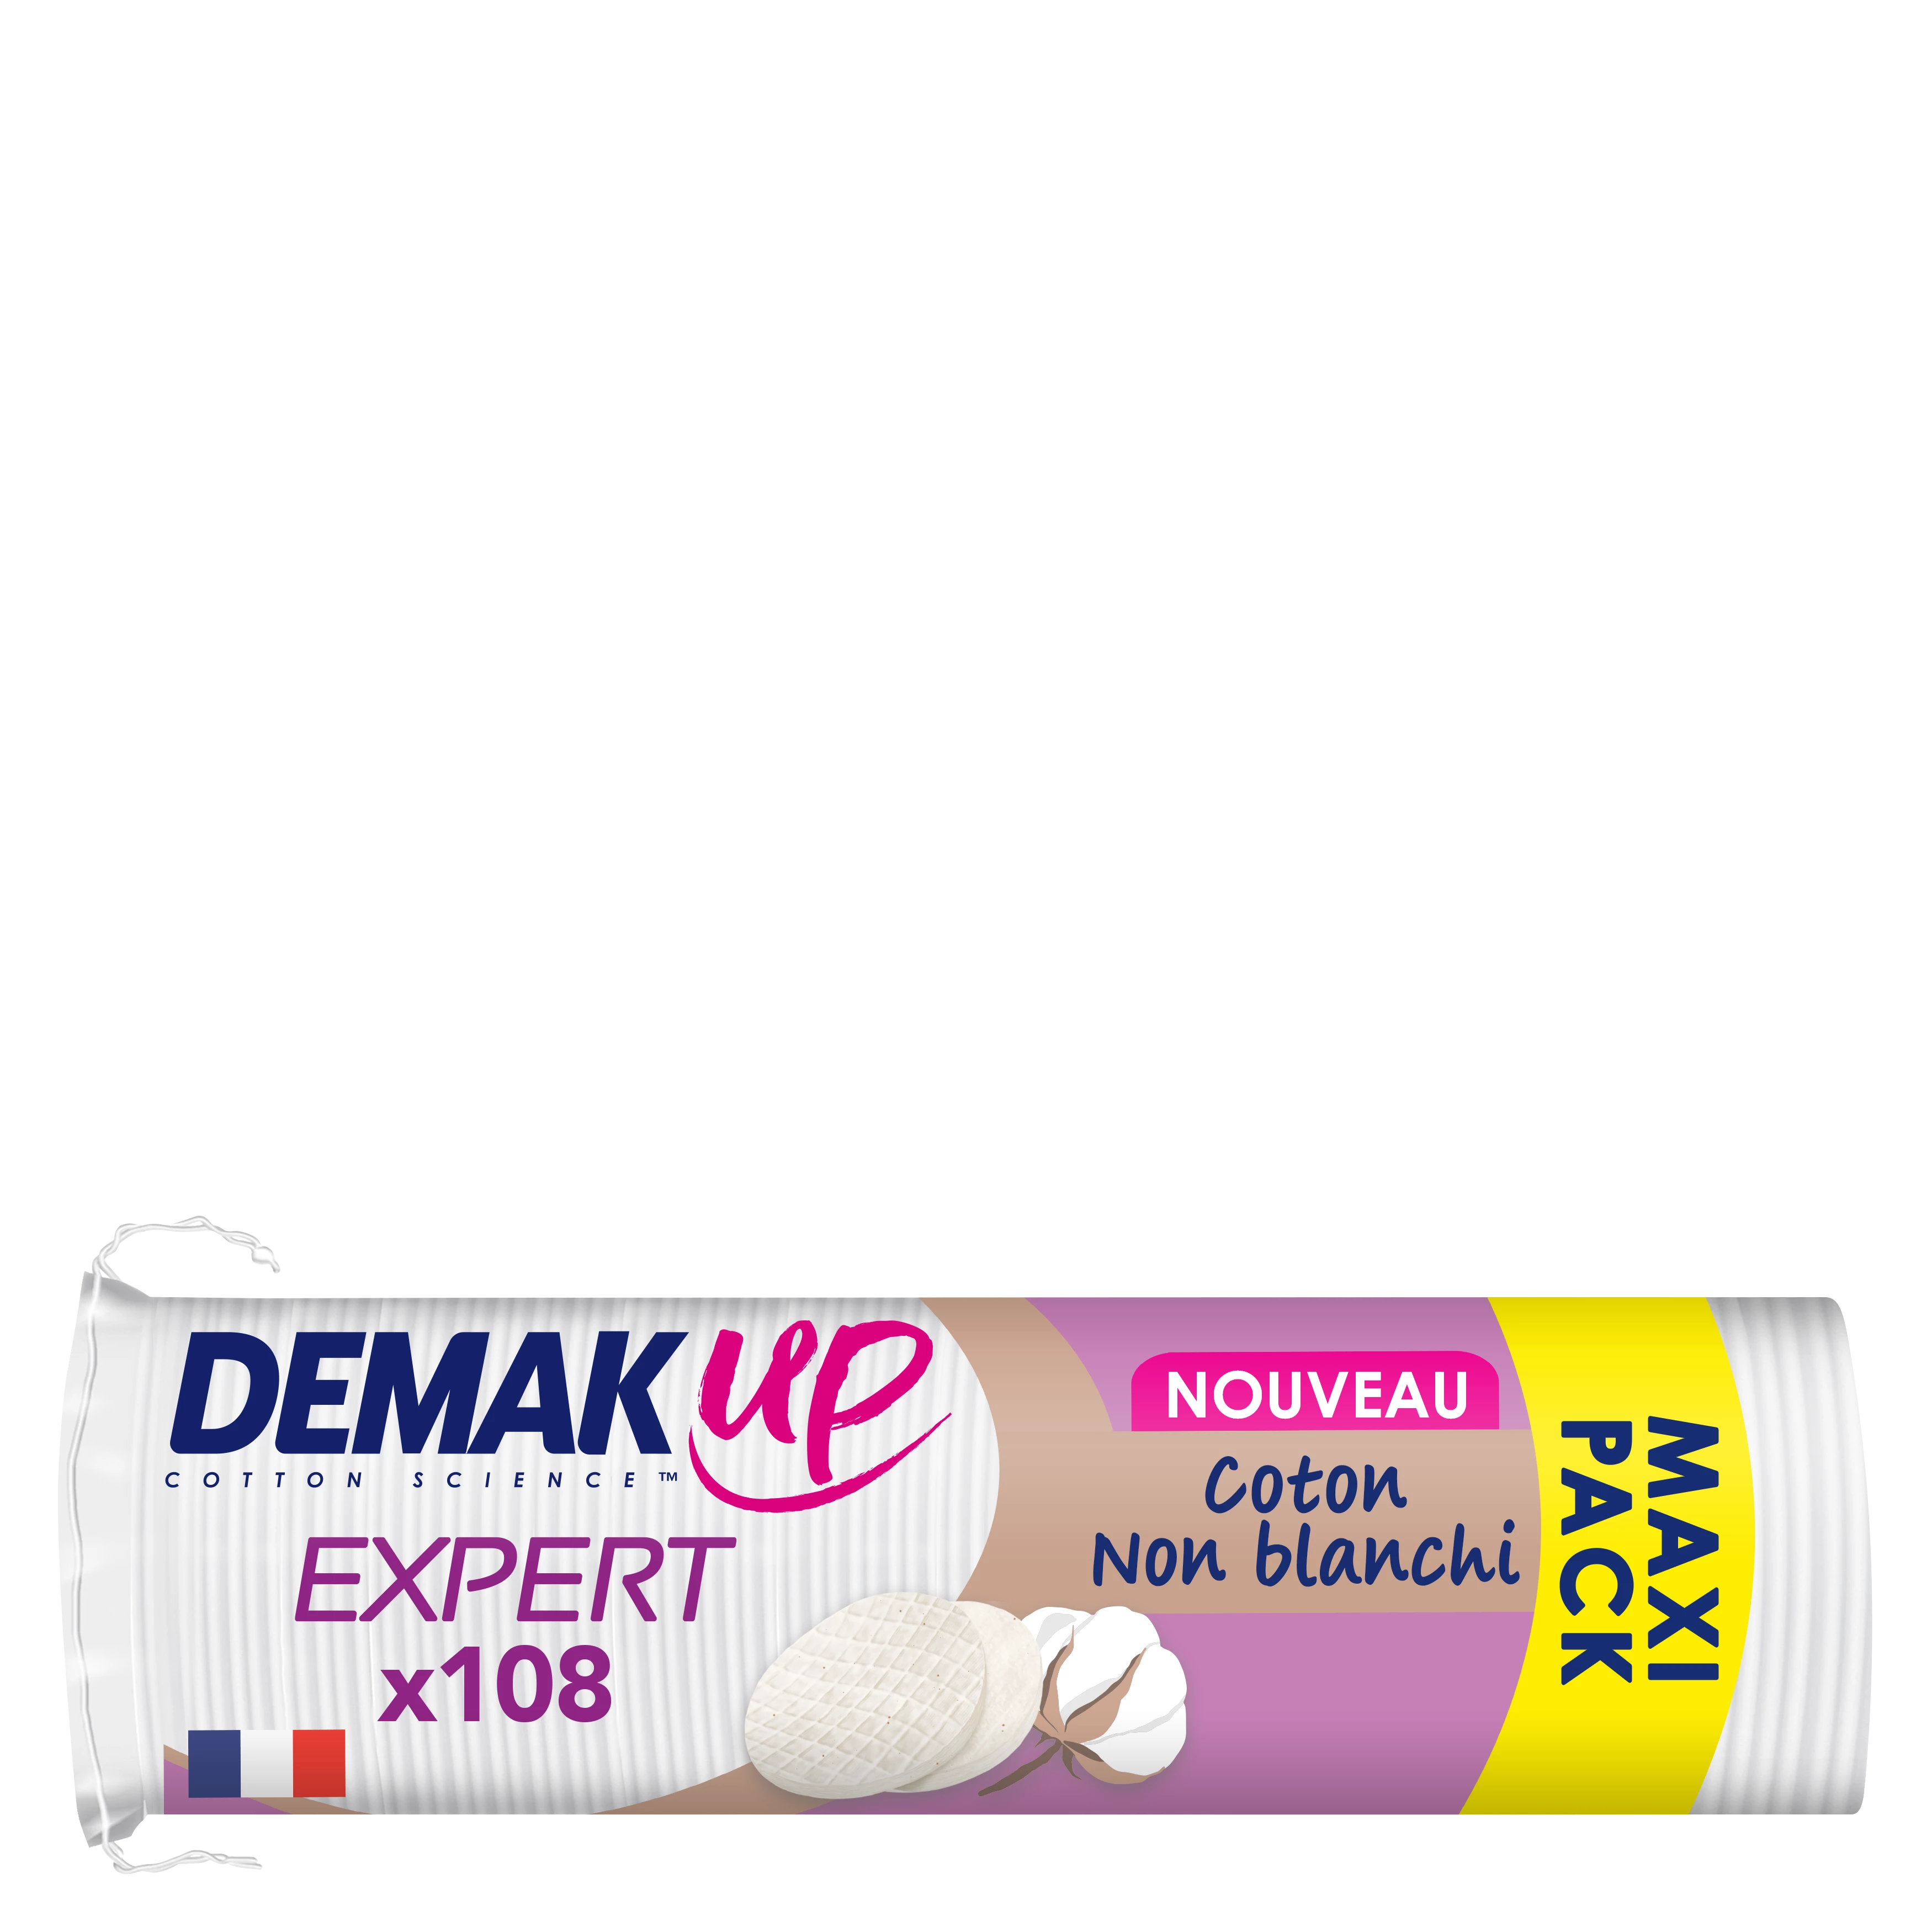 Dischetto struccante Demakup Expert X108